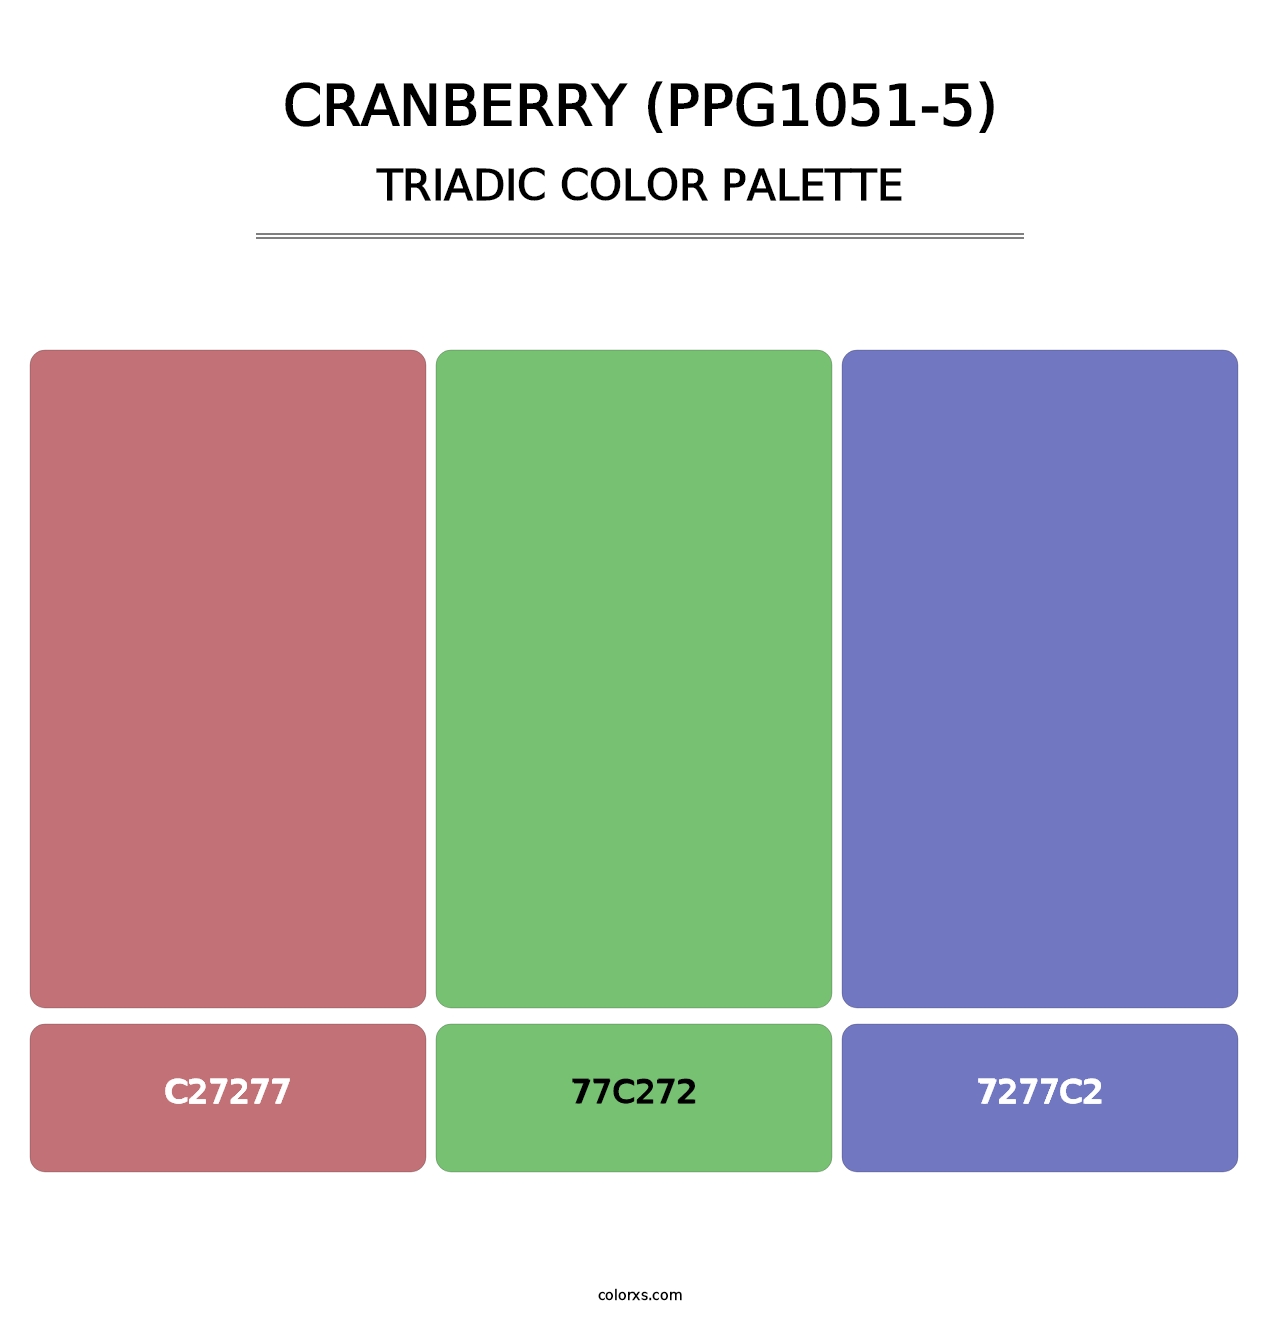 Cranberry (PPG1051-5) - Triadic Color Palette